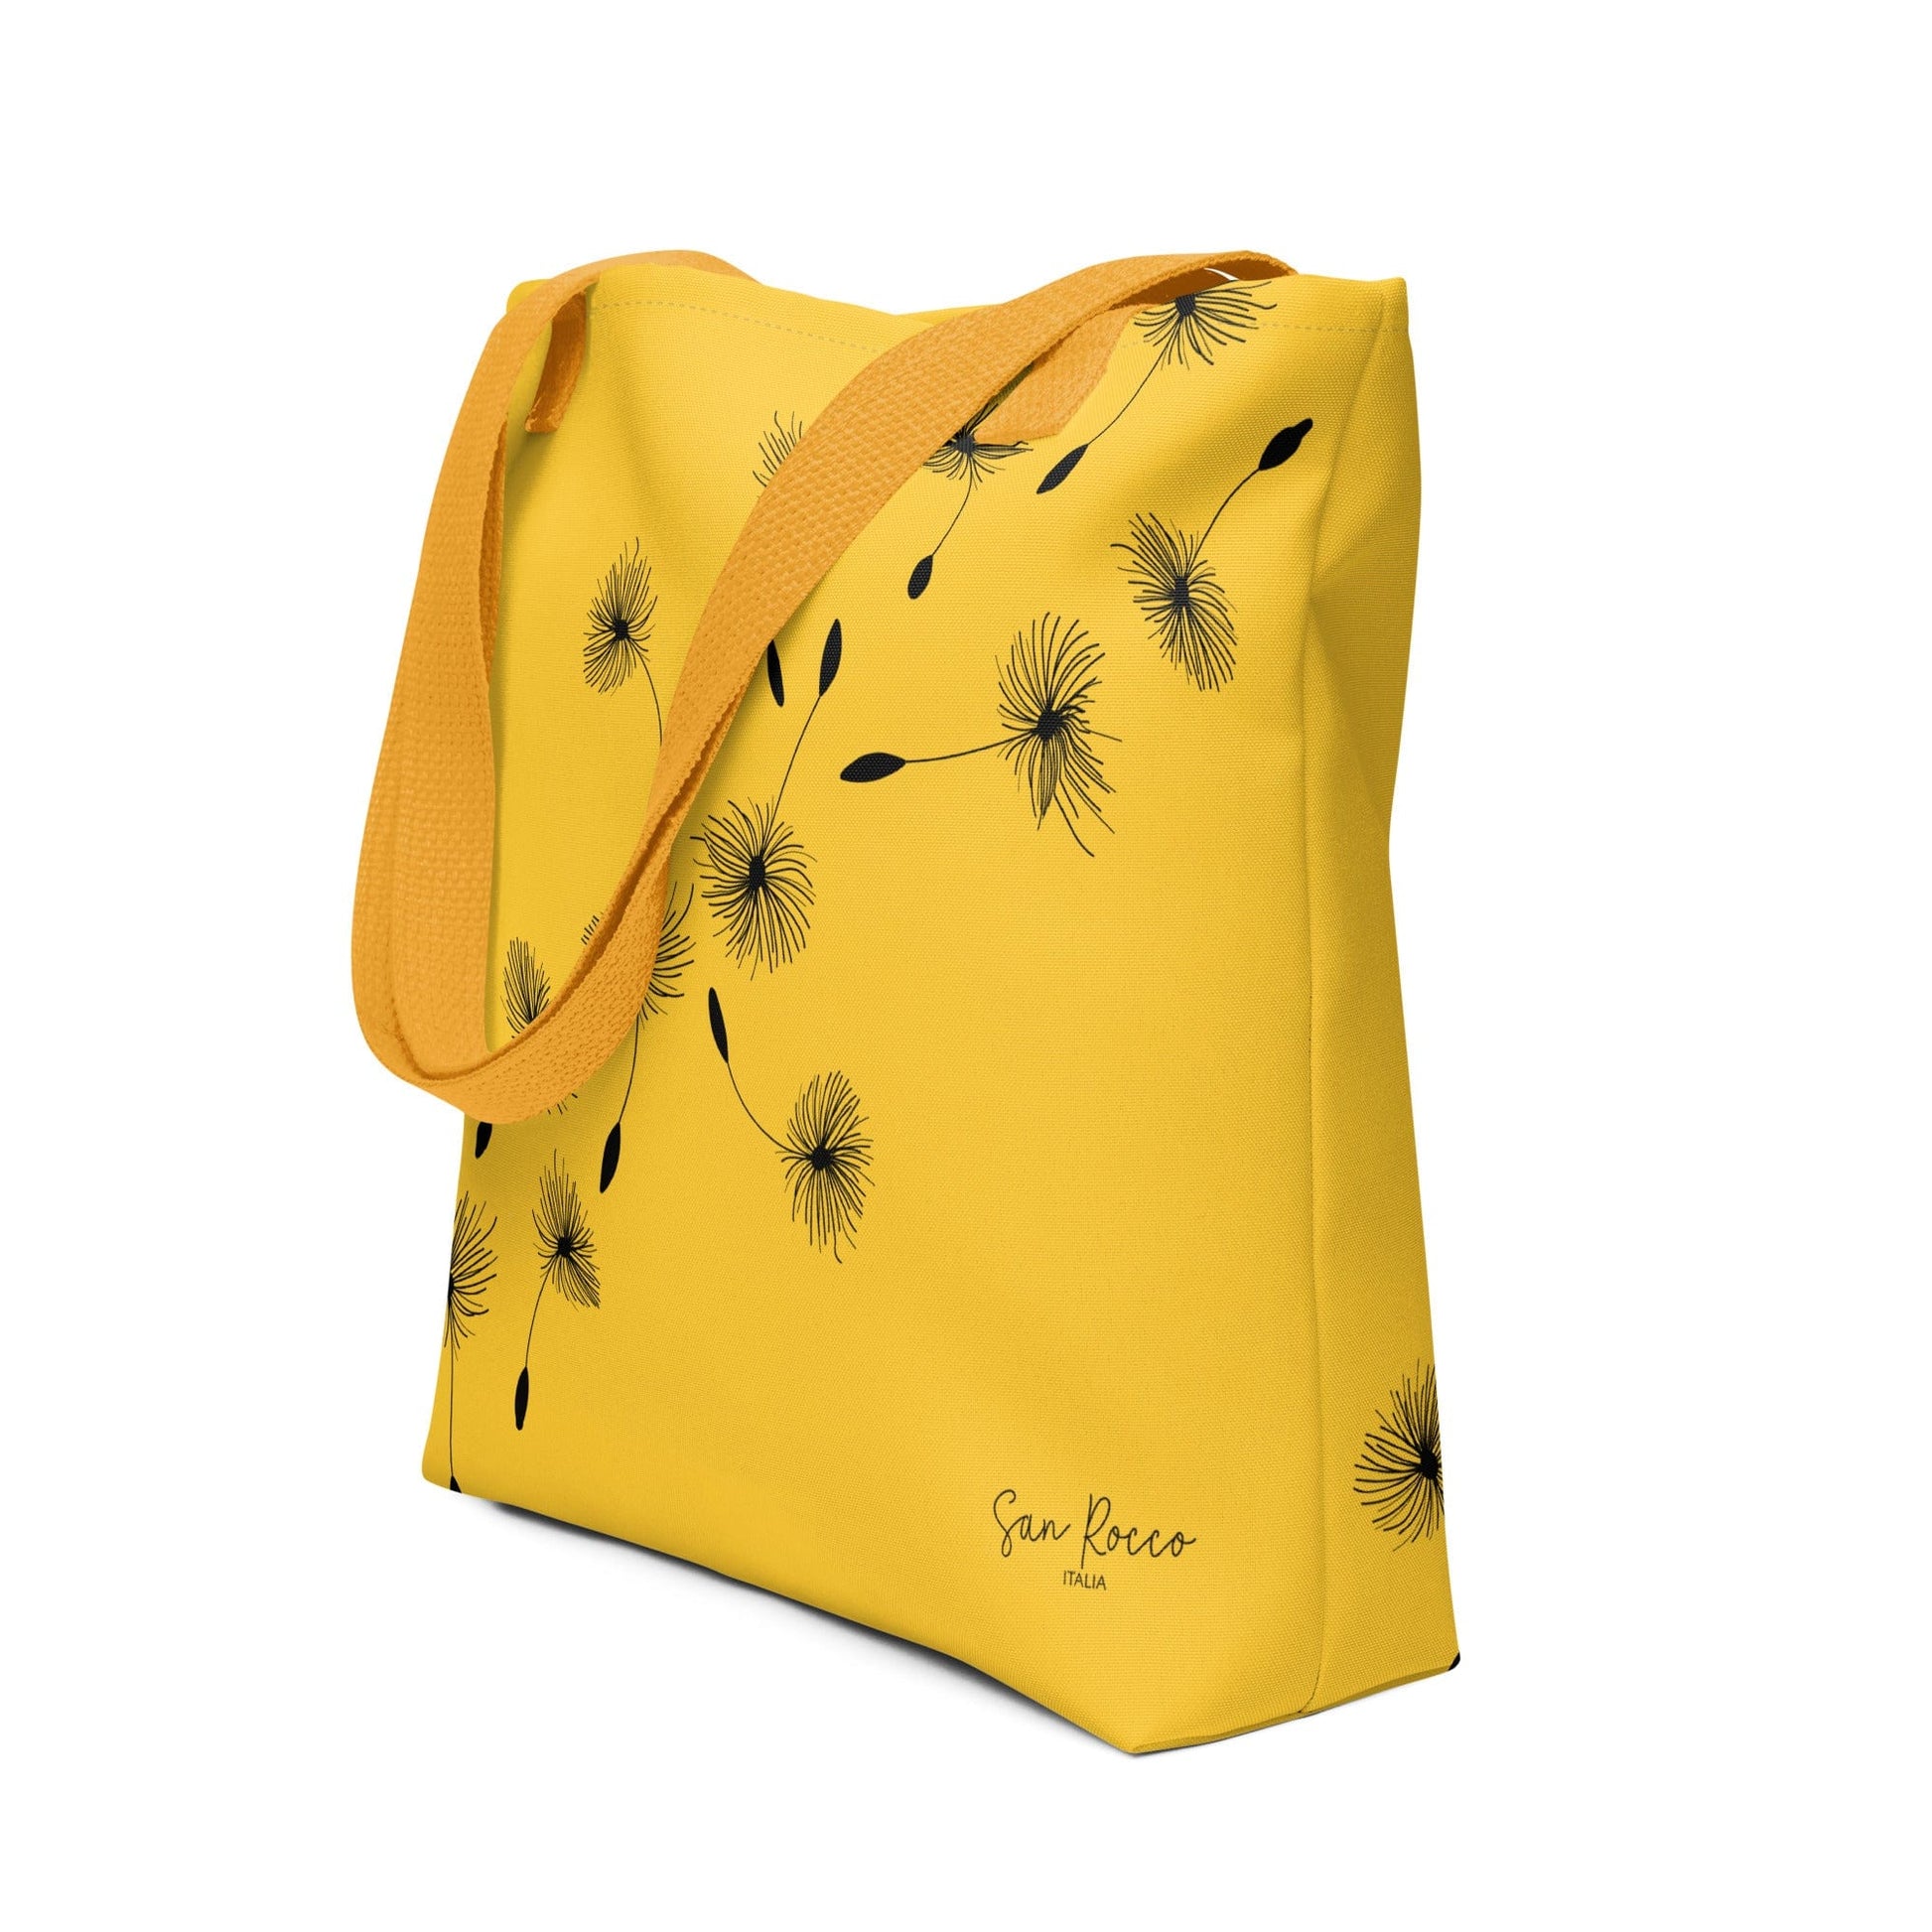 Yellow Dandelion Tote Bag - Premium Accessories - Handbags - Shop now at San Rocco Italia